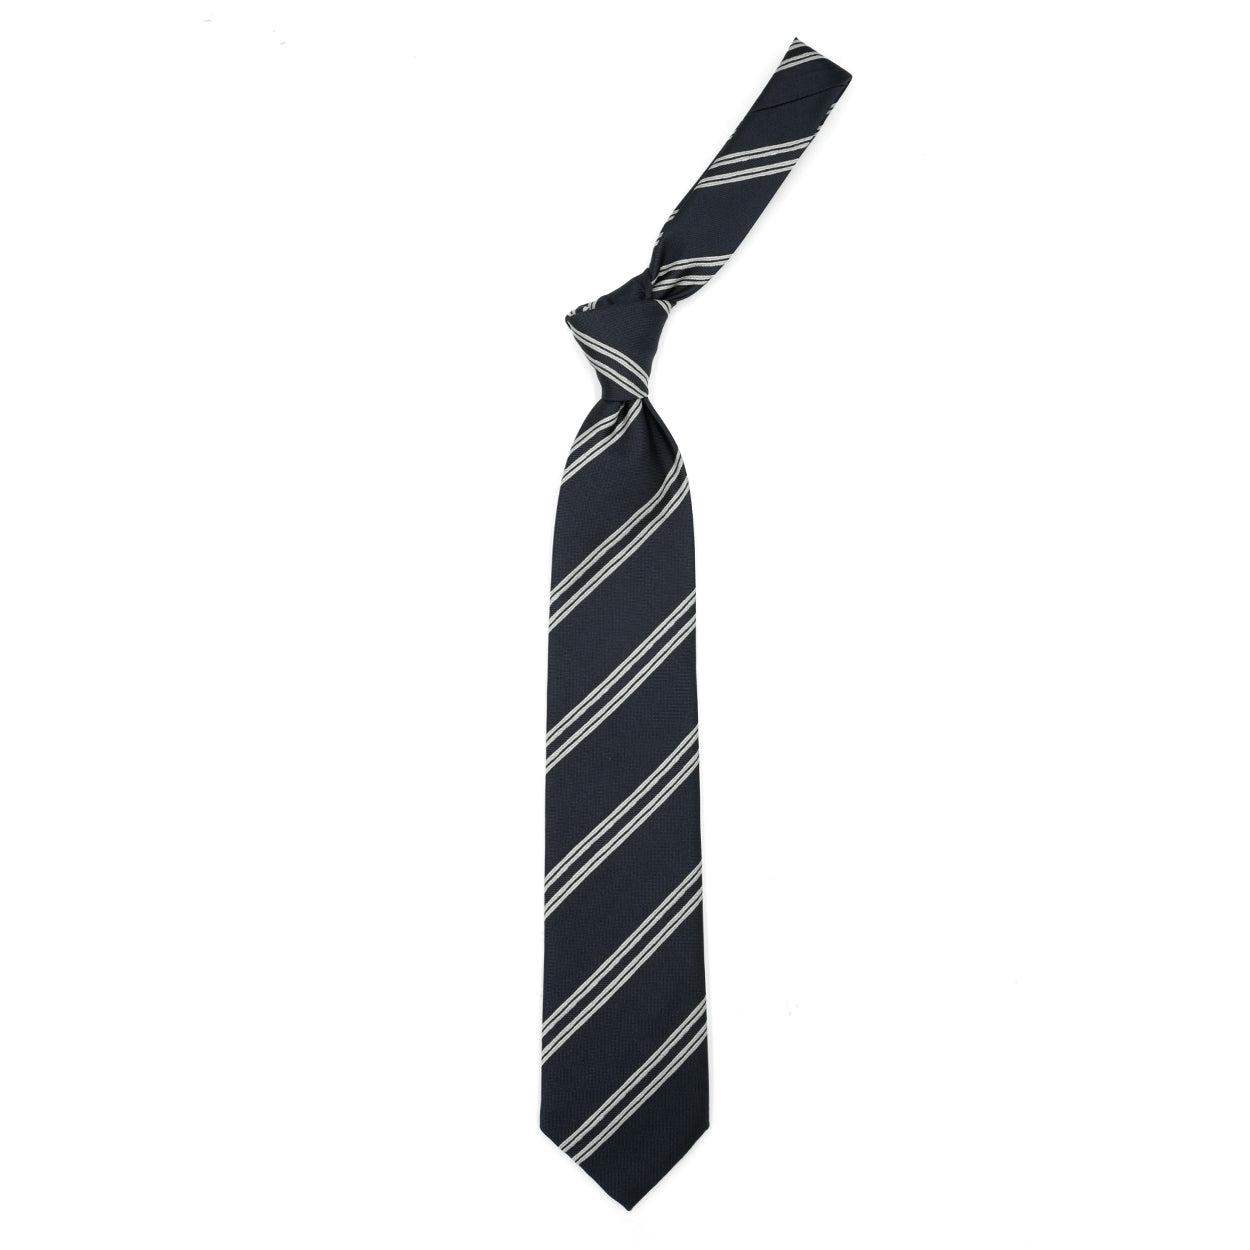 Black tie with gray stripes